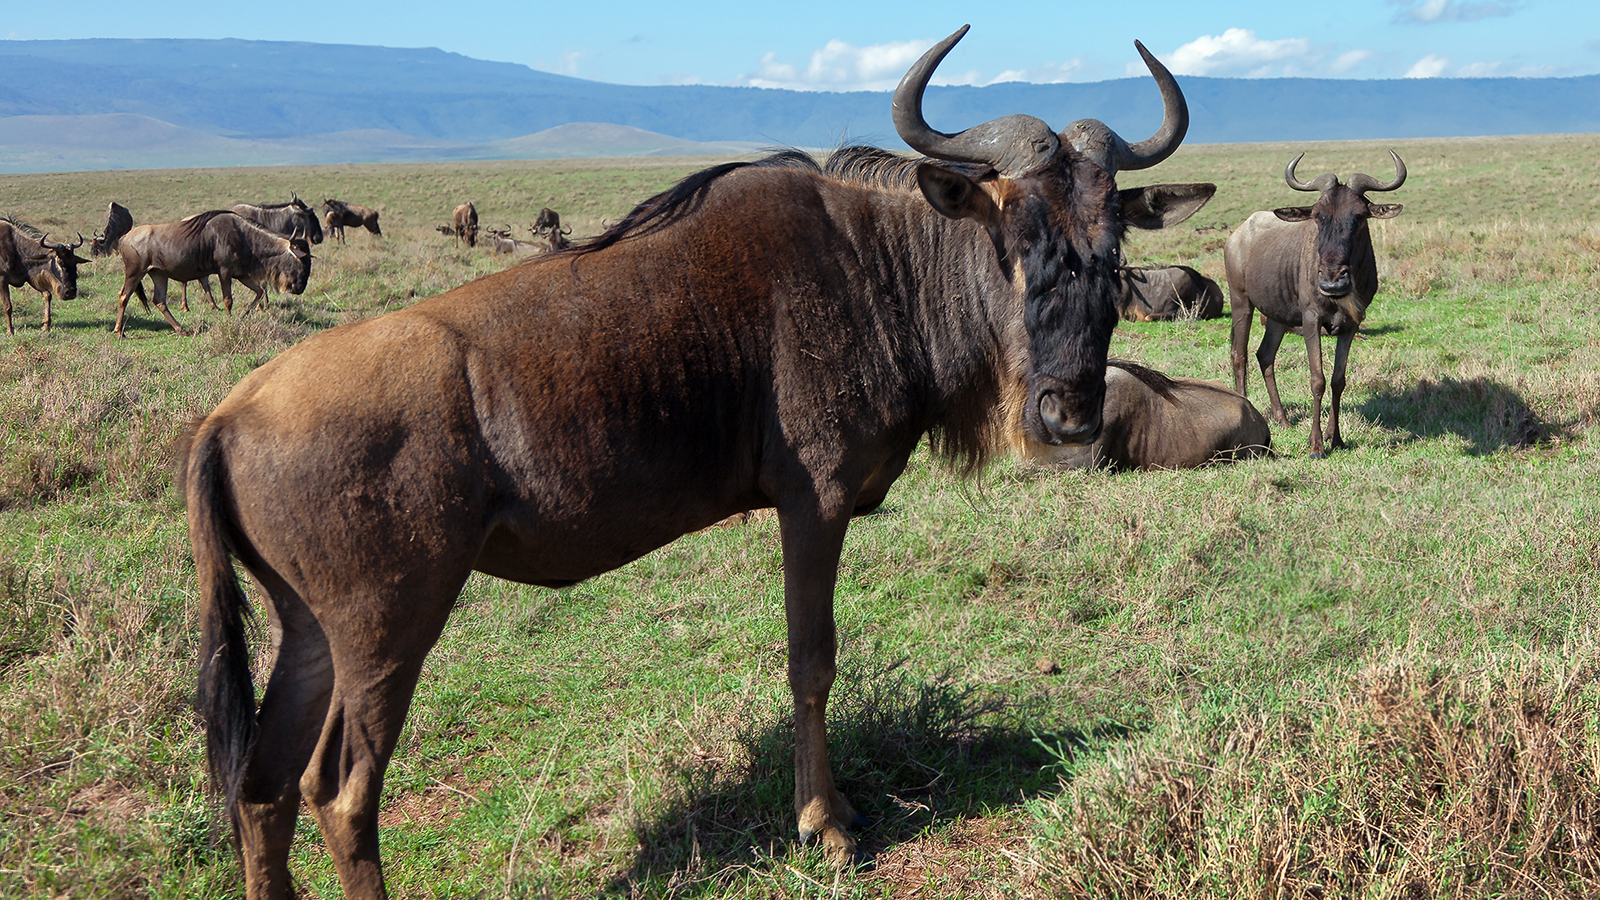 Wildebeests in Crater Ngorongoro National Park - Tanzania;